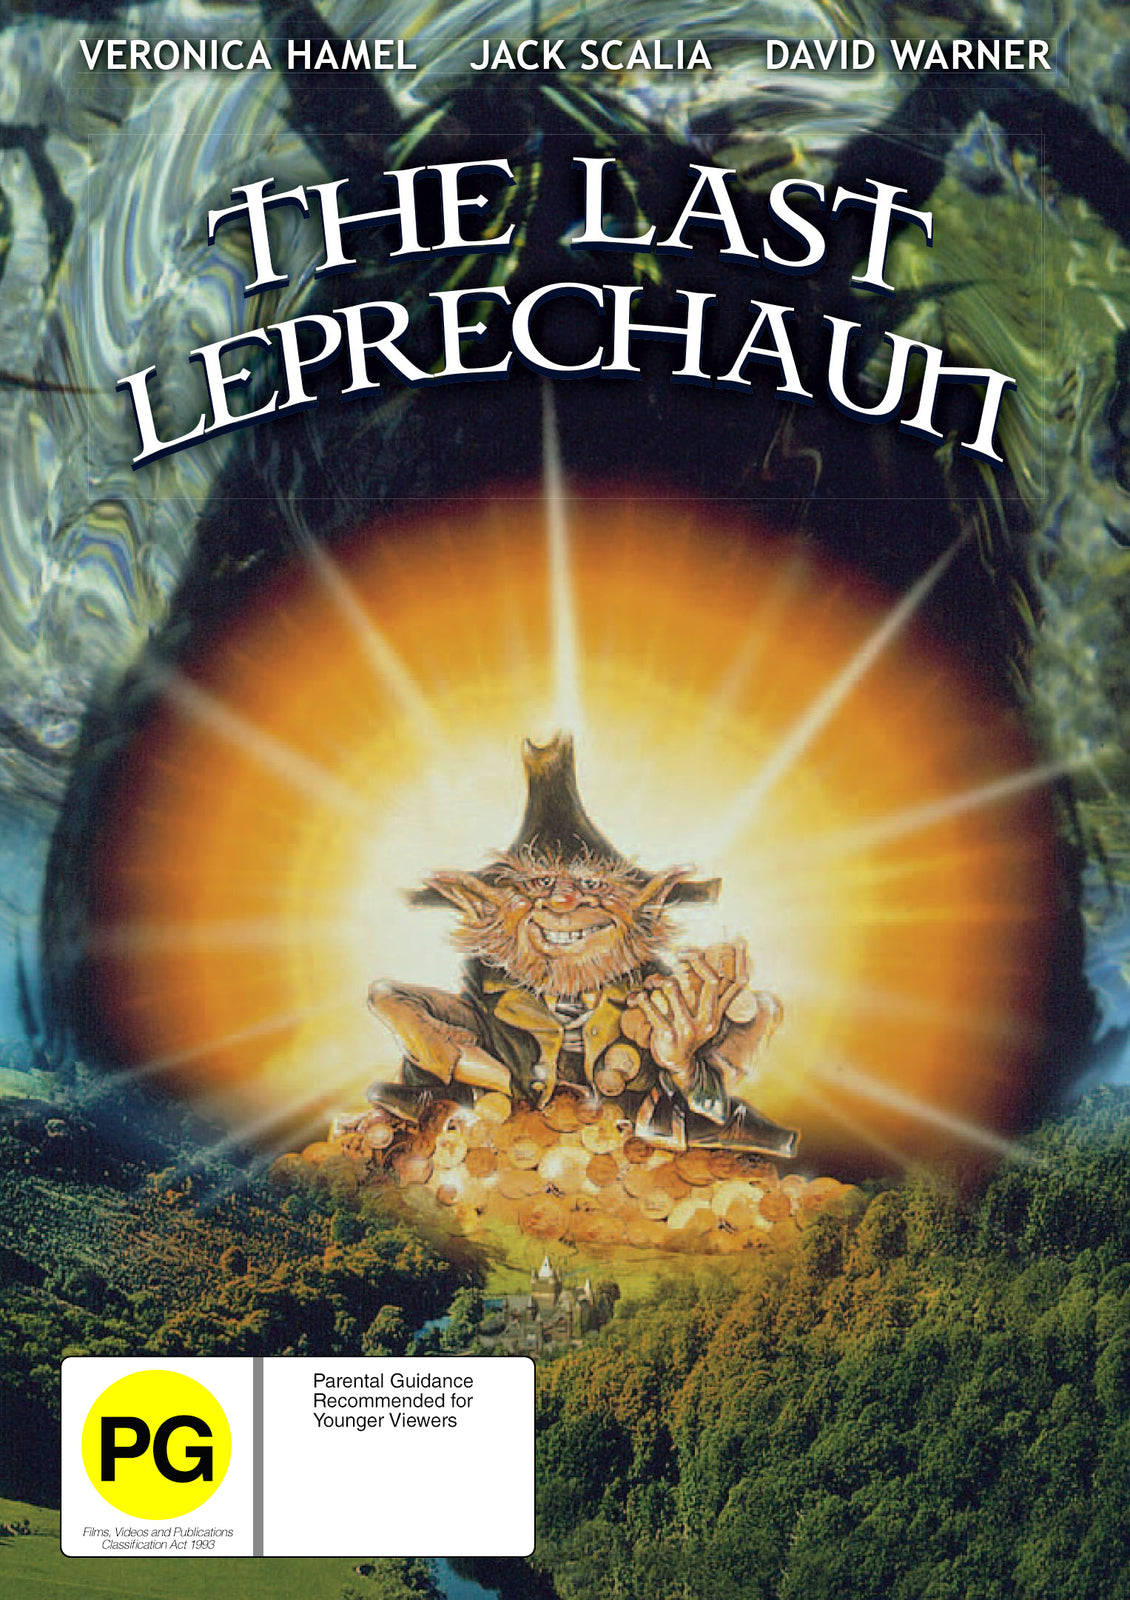 The Last Leprechaun (DVD)